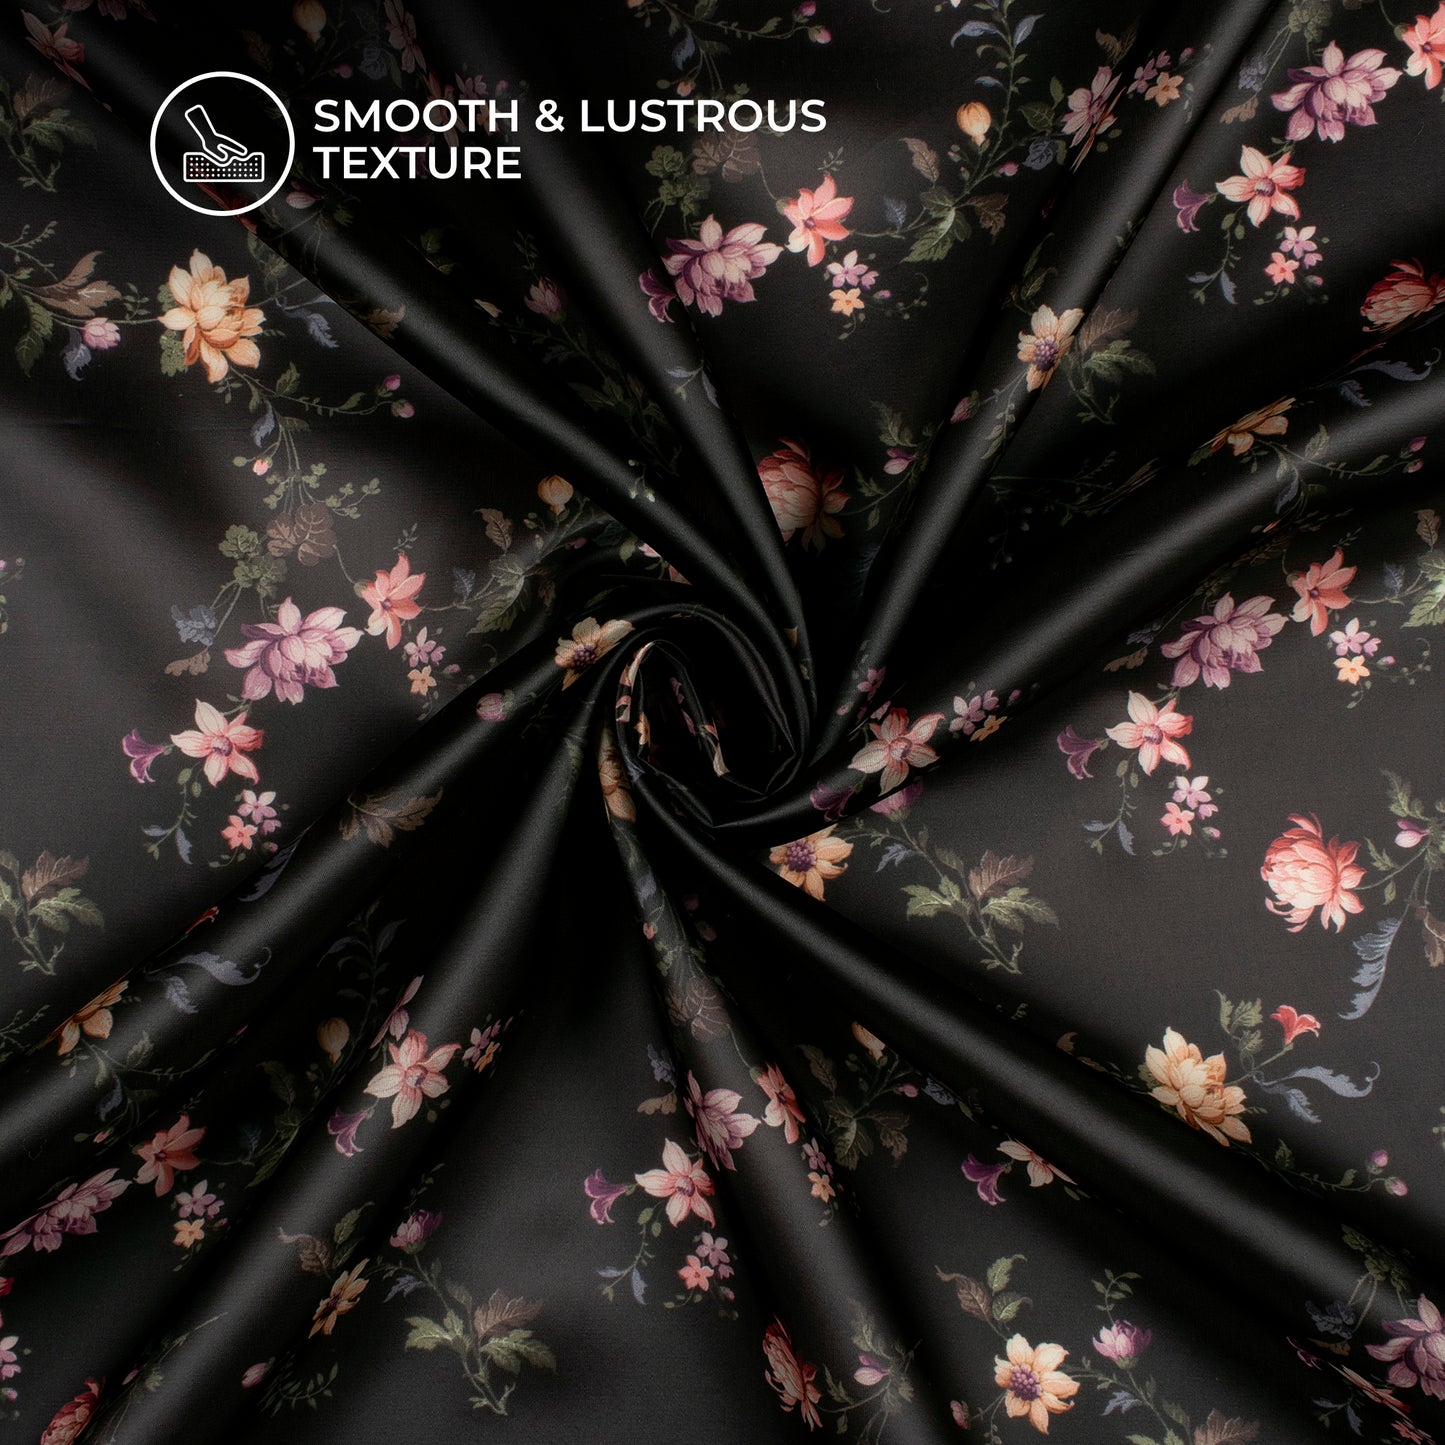 Pleasing Black Floral Digital Print Organza Satin Fabric